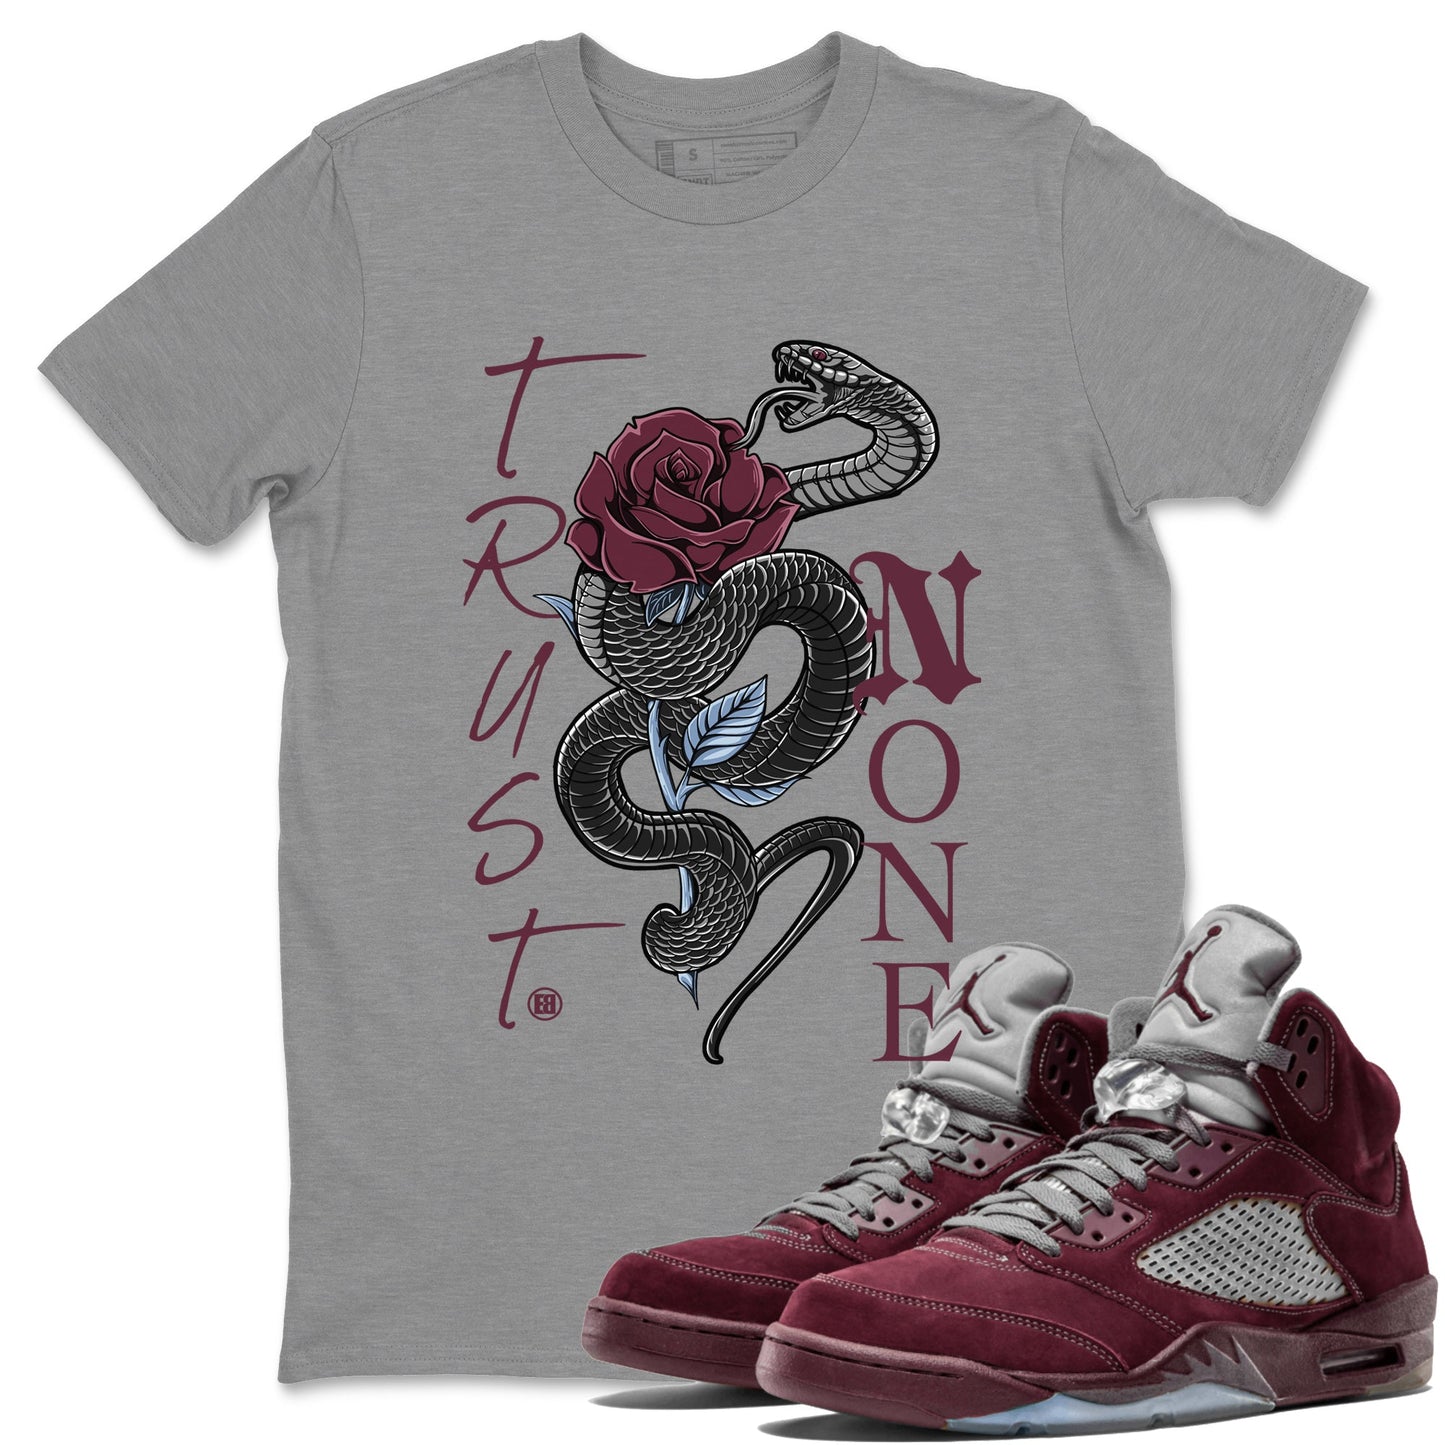 Jordan 5 Burgundy Shirts Trust None Sneaker Tees Air Jordan 5 Burgundy Sneaker Release Tees Unisex Shirts Heather Grey 1